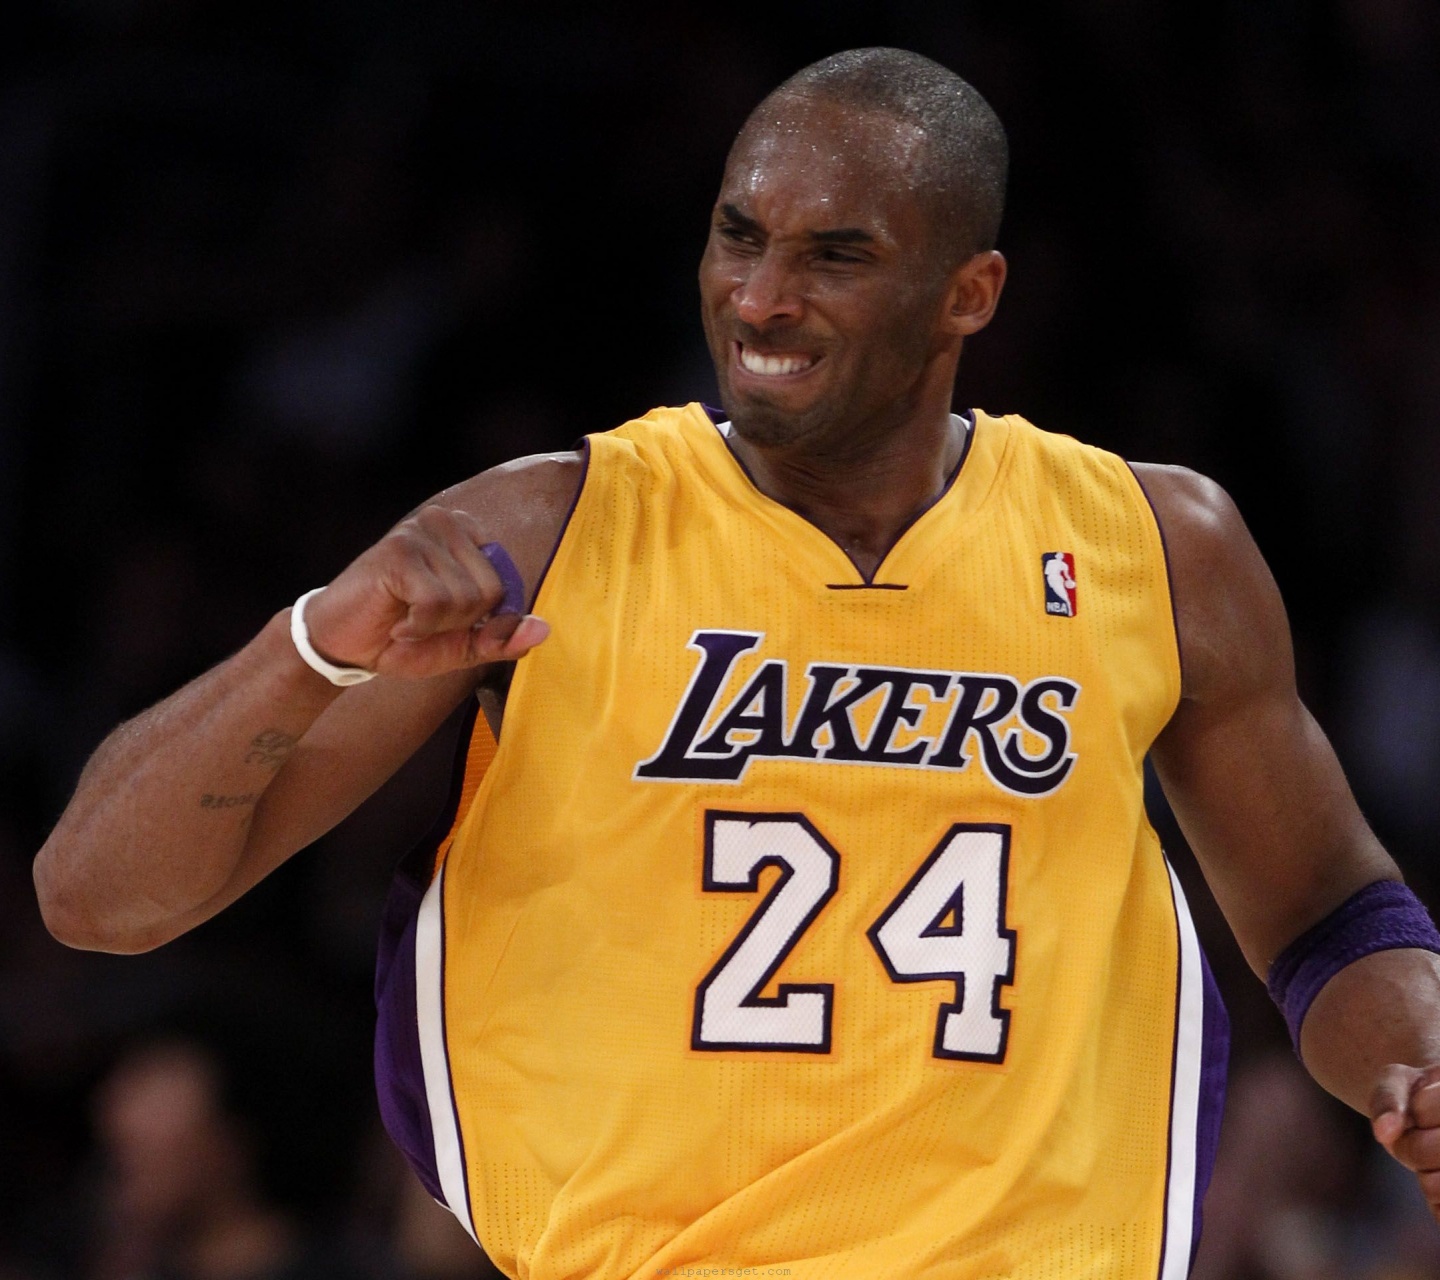 Los Angeles Lakers American Professional Basketball Kobe Bryant1